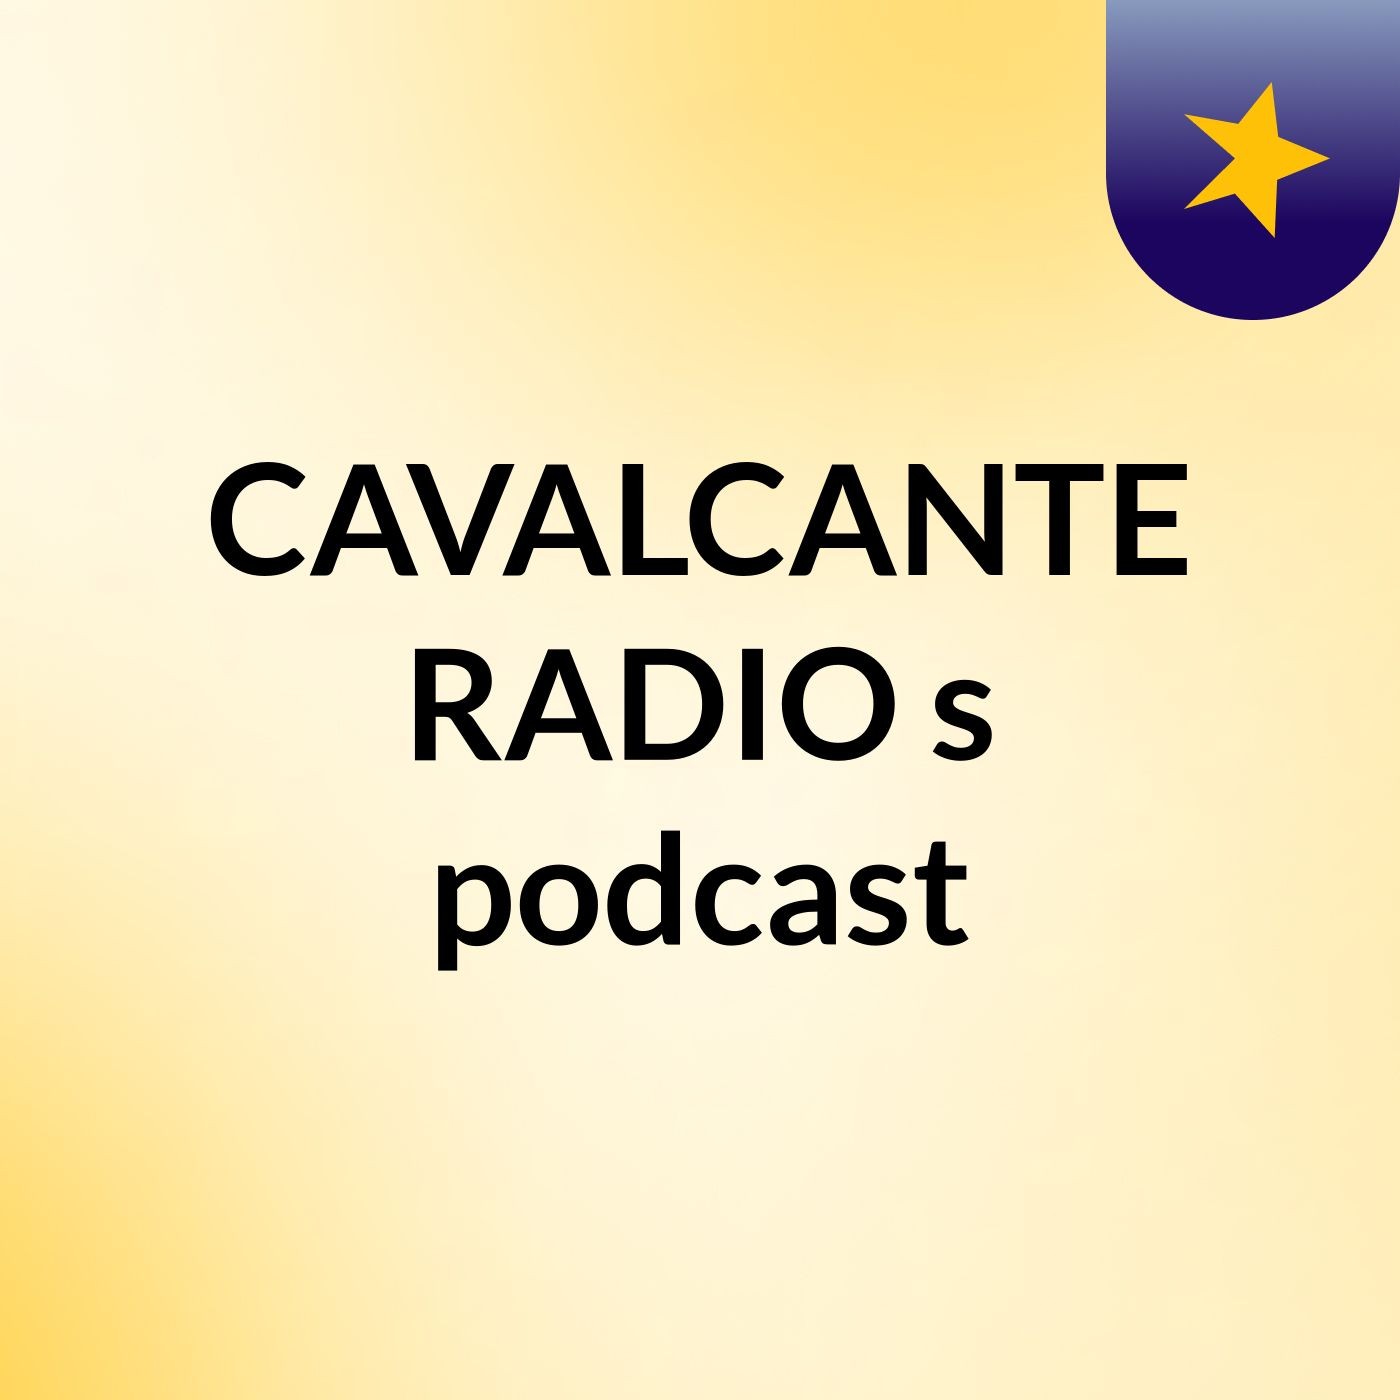 CAVALCANTE RADIO's podcast